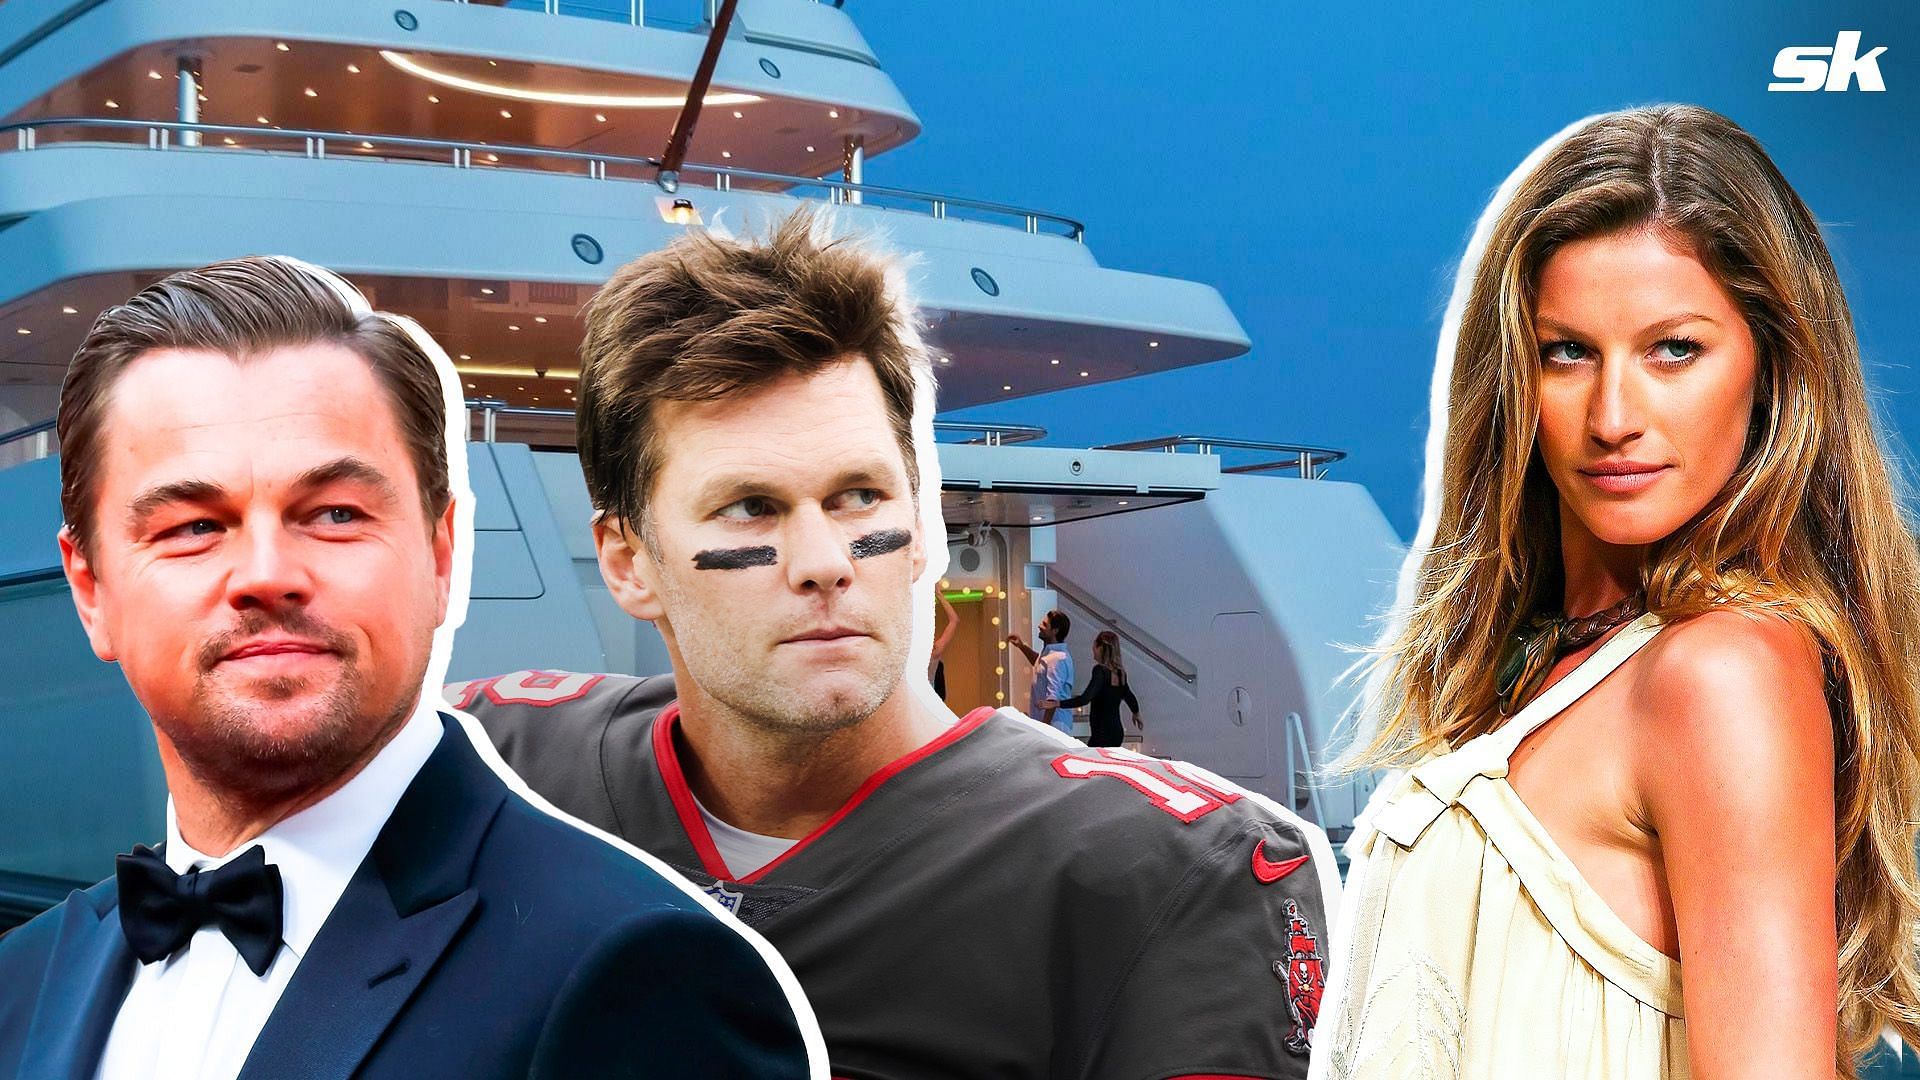 Fans react to Tom Brady, Leonardo DiCaprio at yacht party